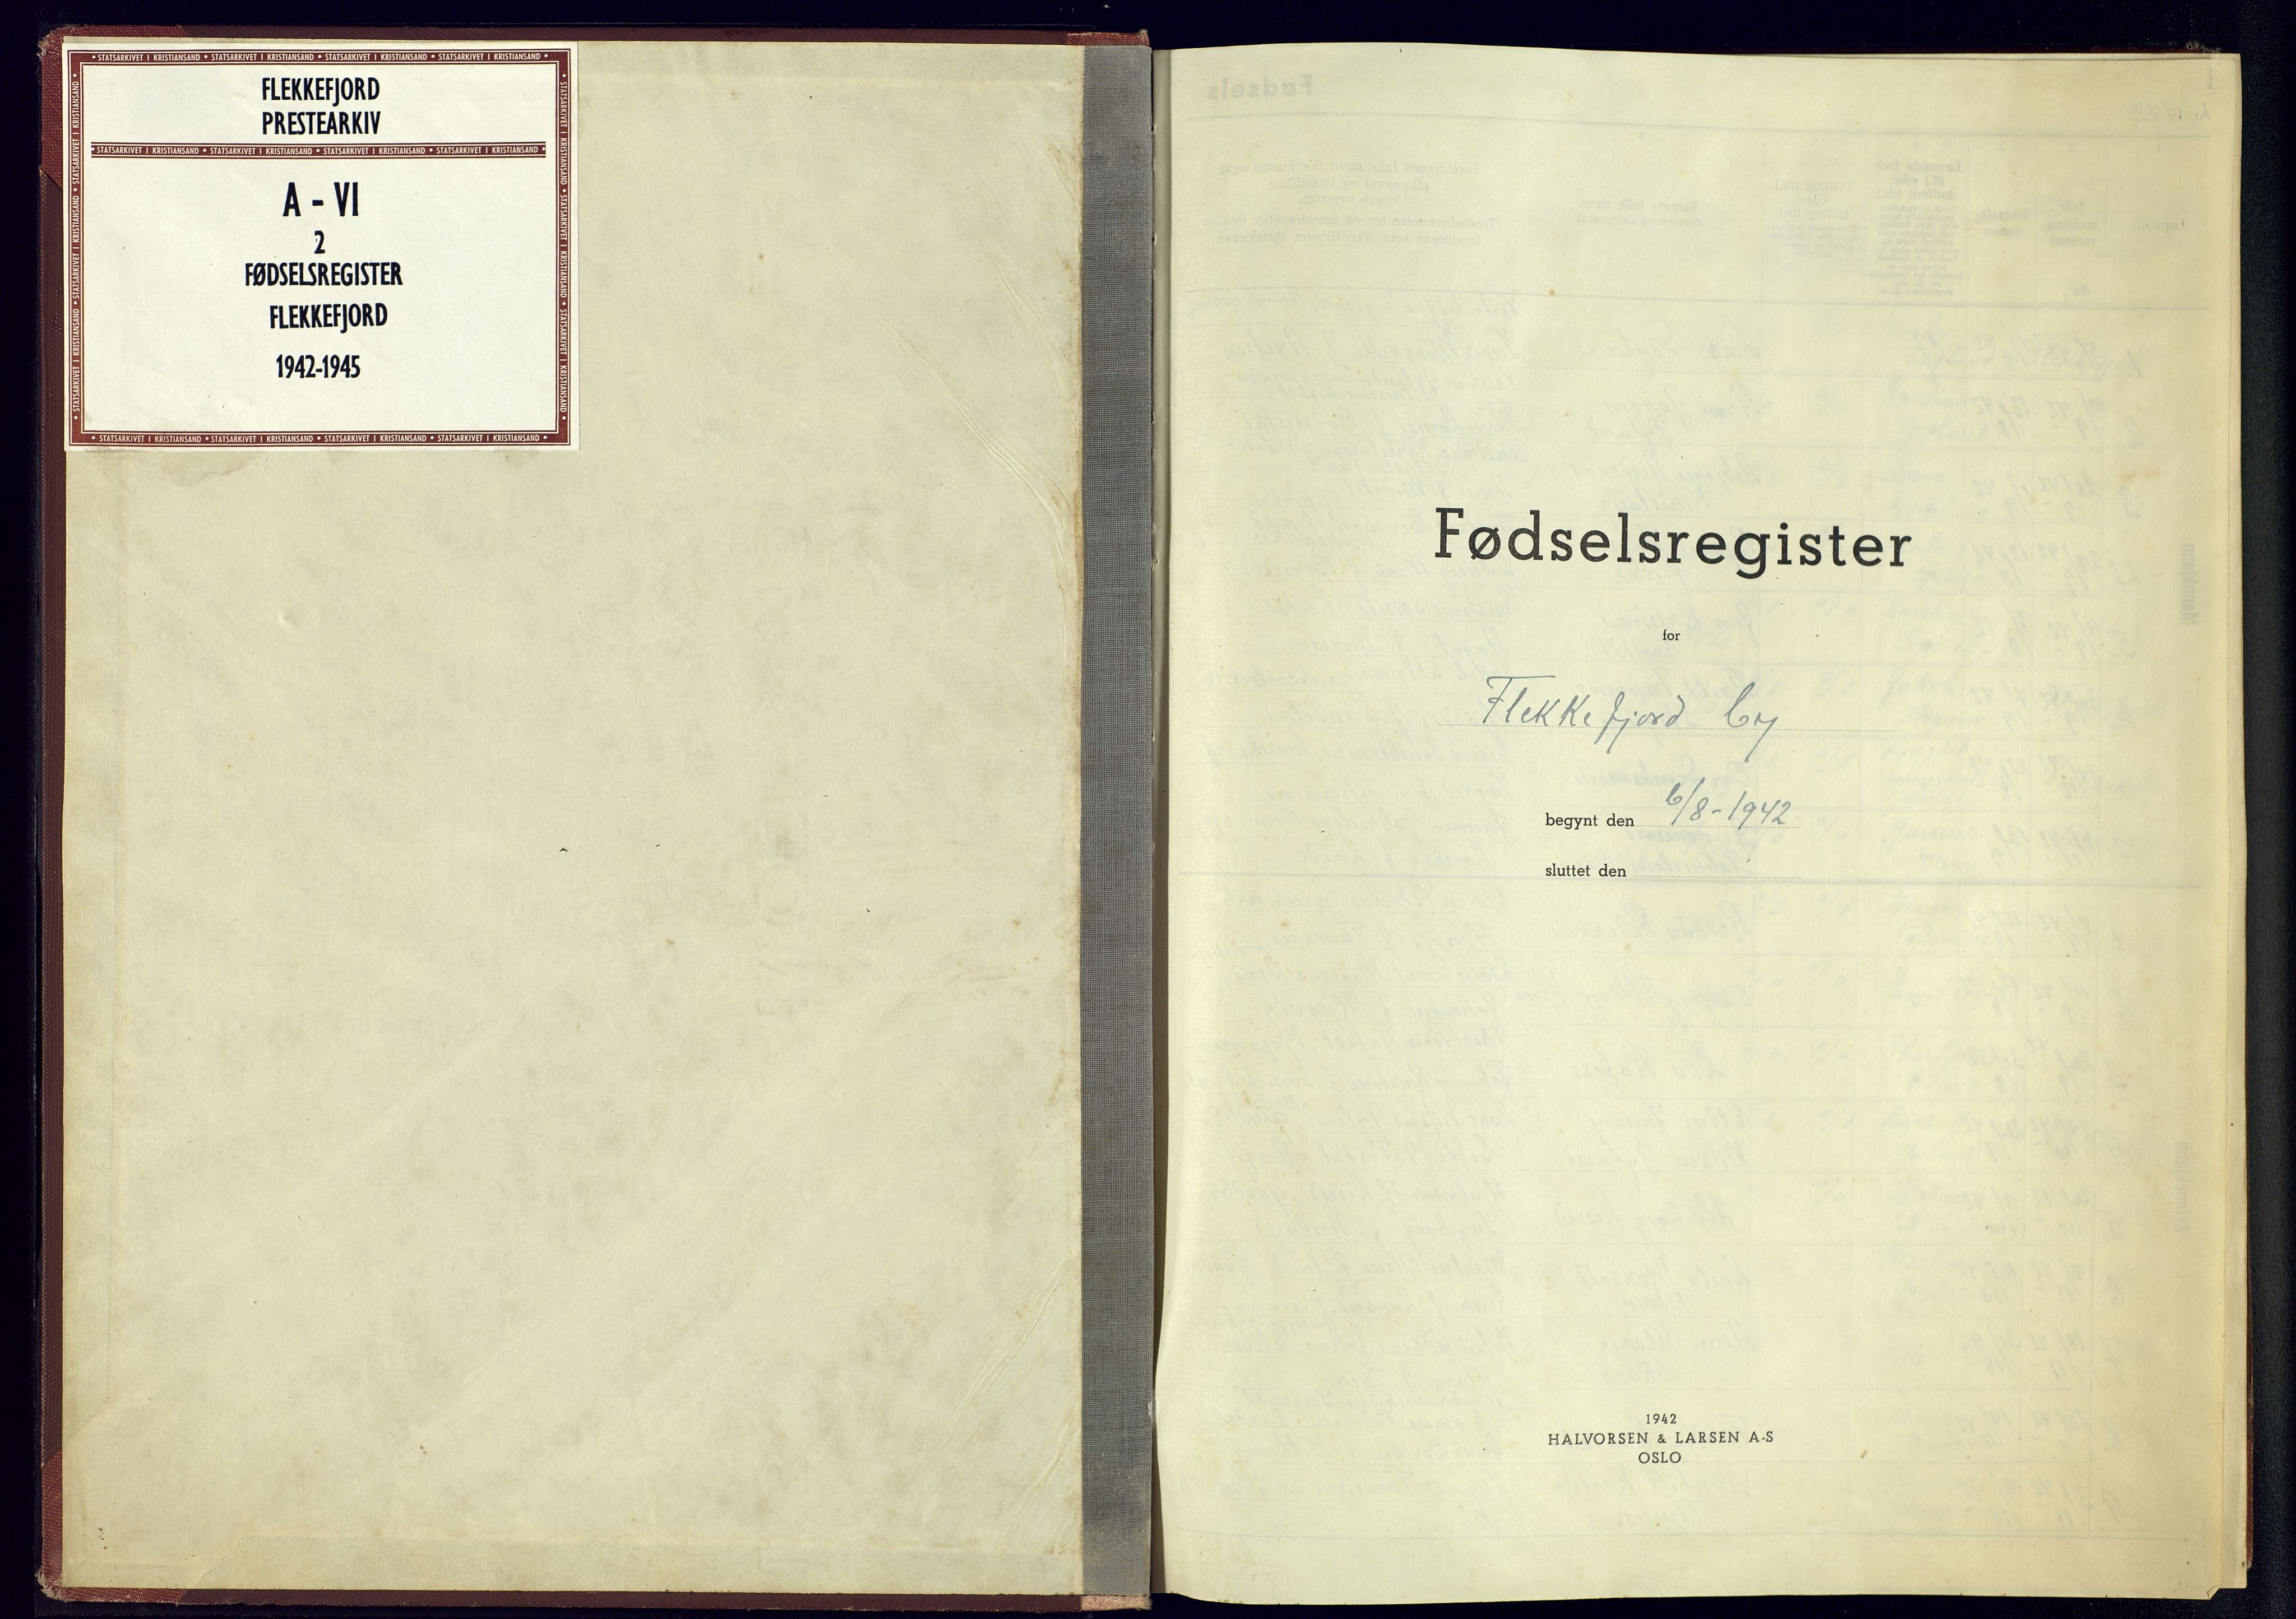 Flekkefjord sokneprestkontor, SAK/1111-0012/J/Jb/L0001: Fødselsregister nr. A-VI-2, 1942-1945